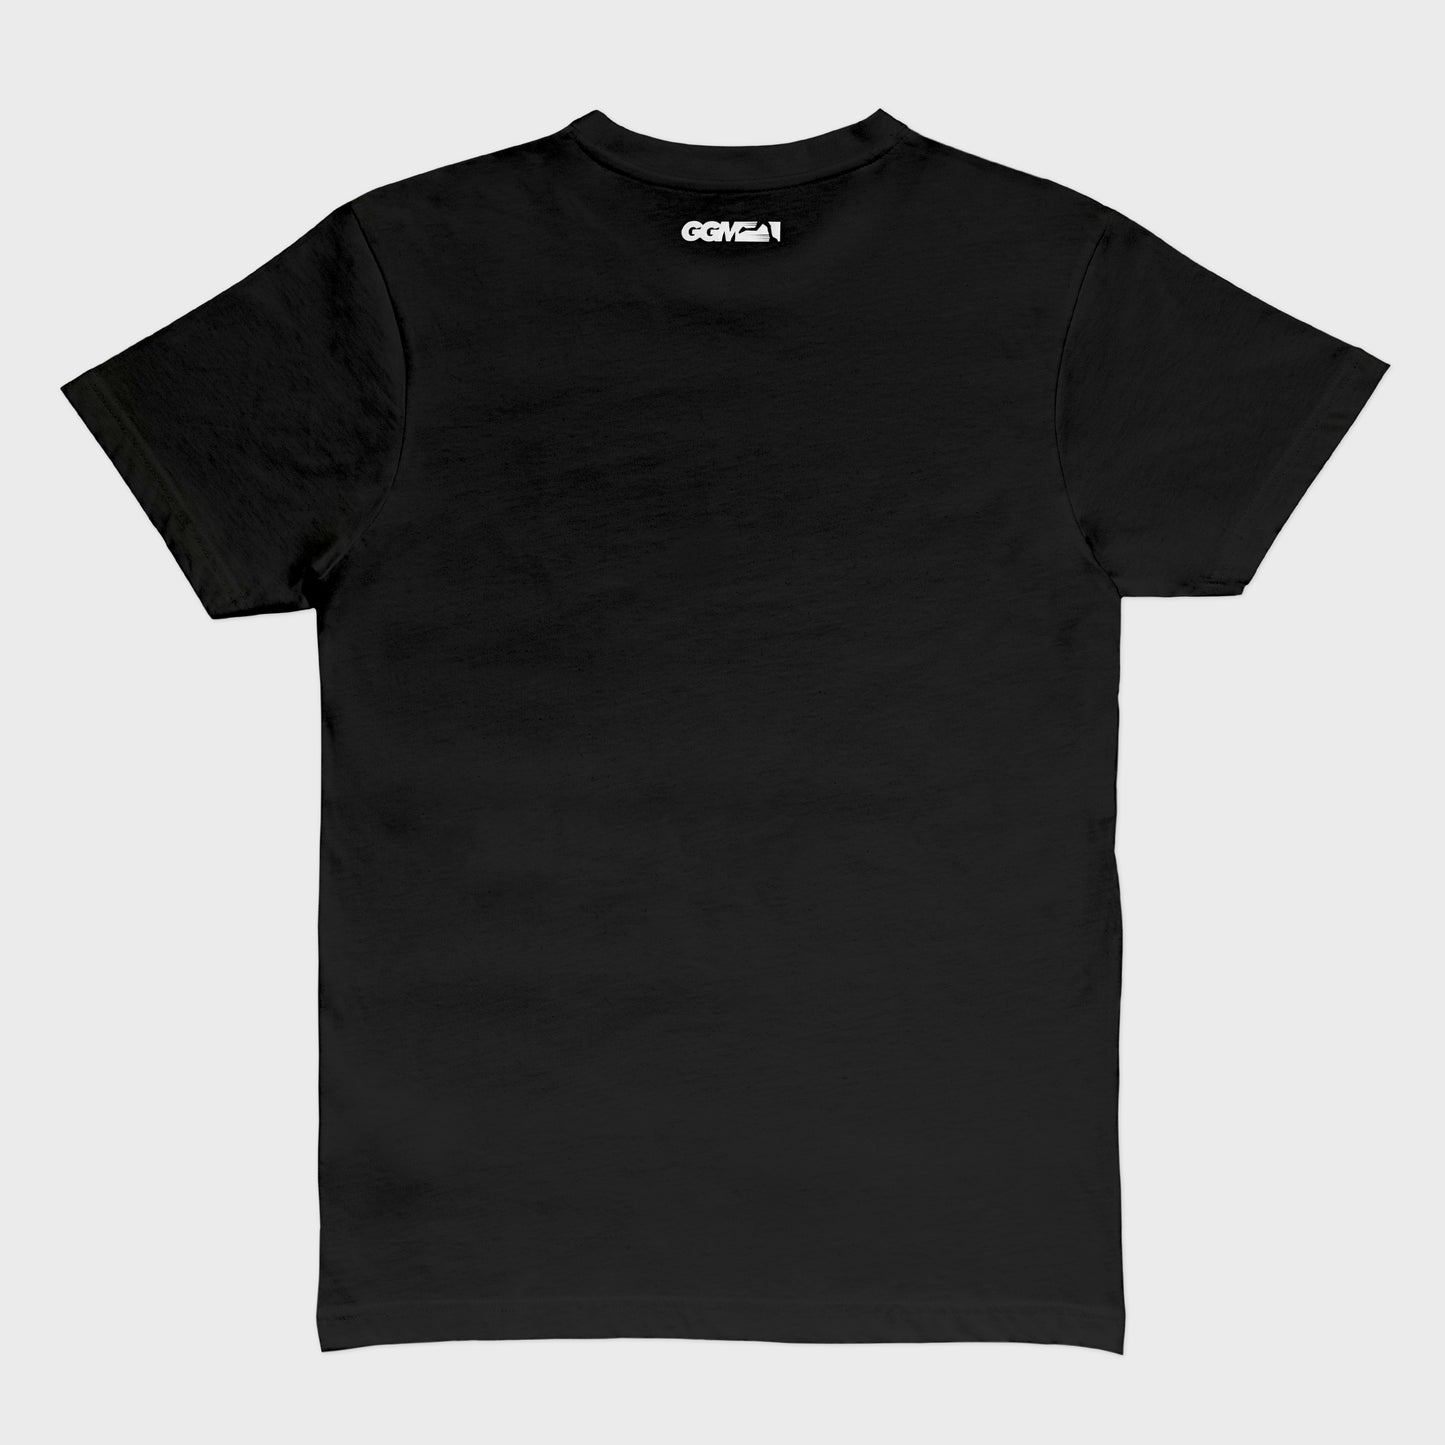 Hustle State of Mind T-Shirt - Black/White